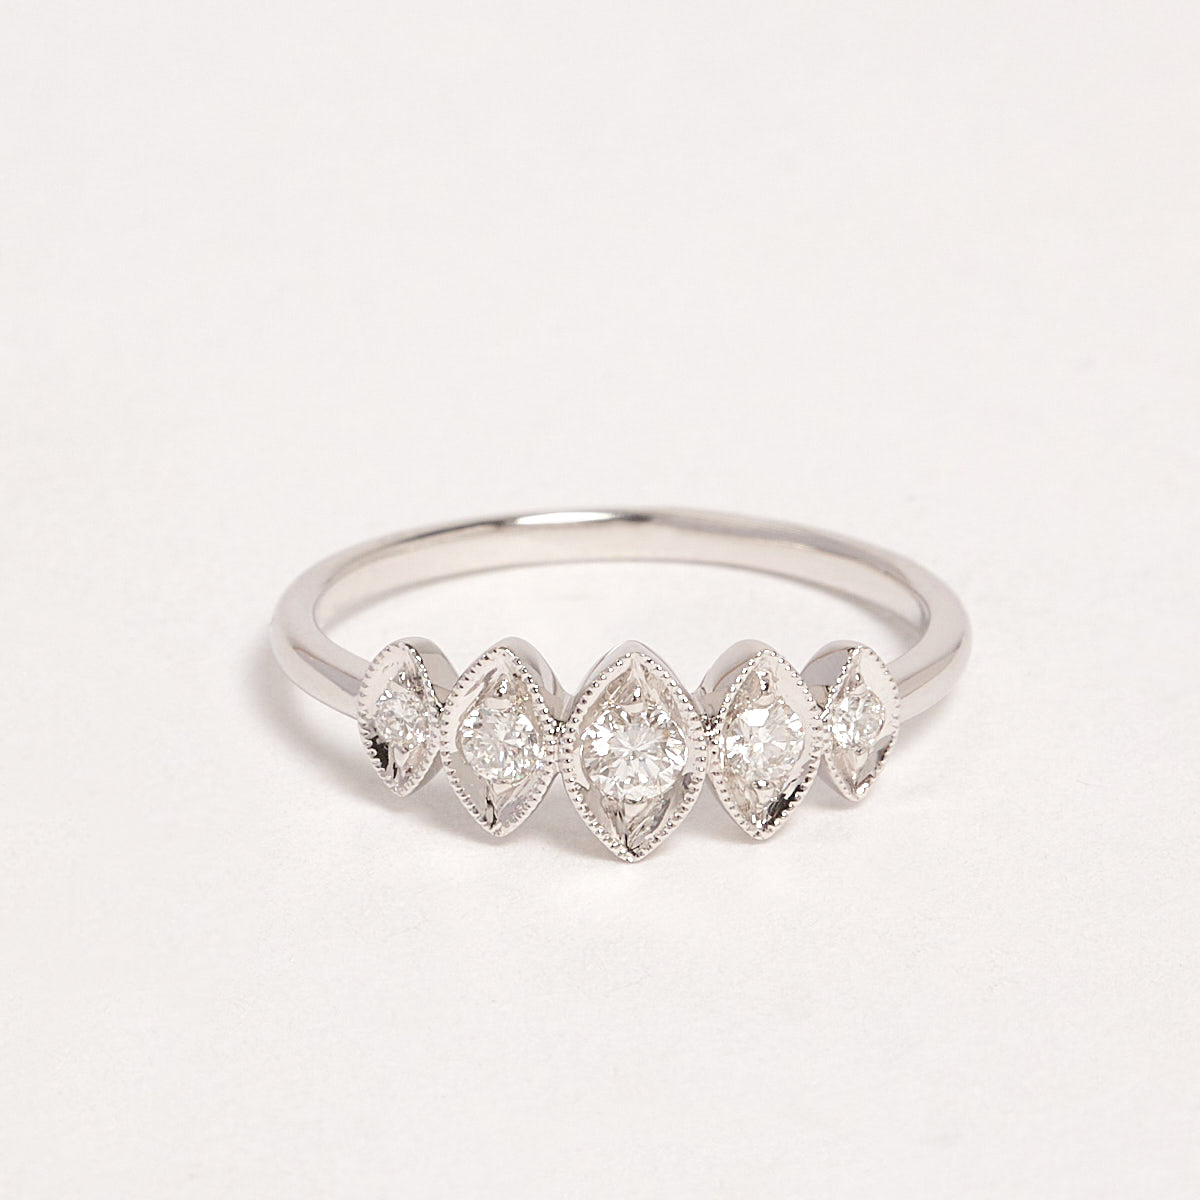 Rowan 9ct White Gold Diamond Ring